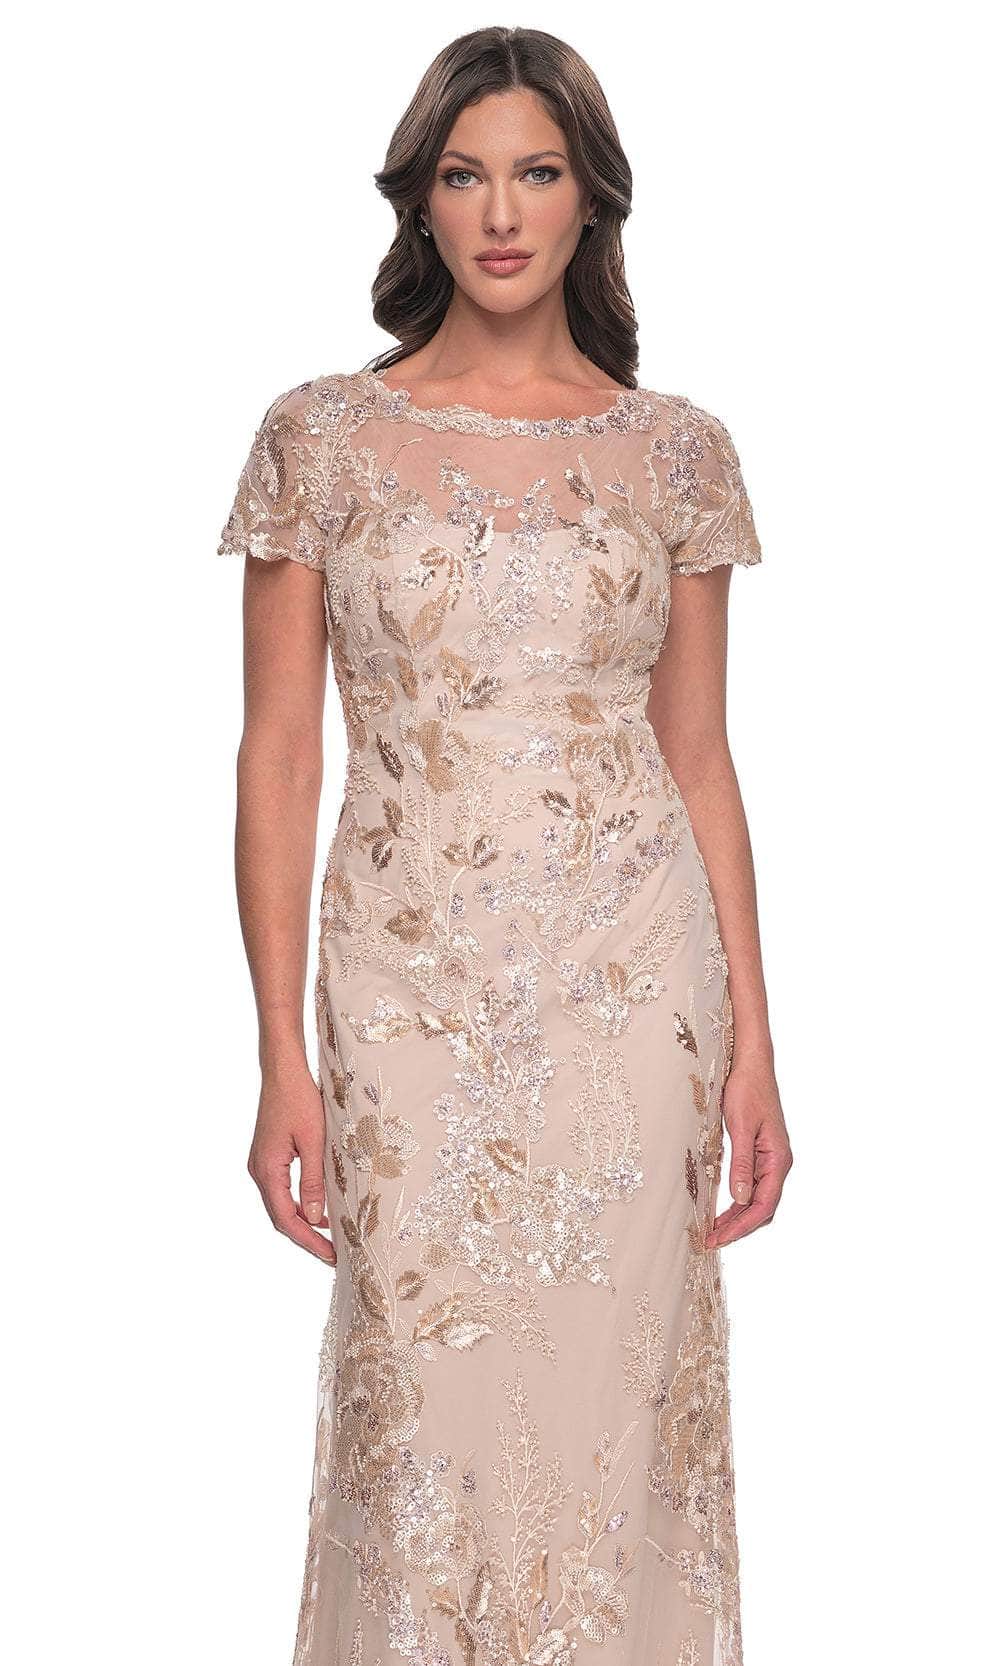 La Femme 30841 - Sequin Illusion Formal Dress Mother of the Bride Dresses